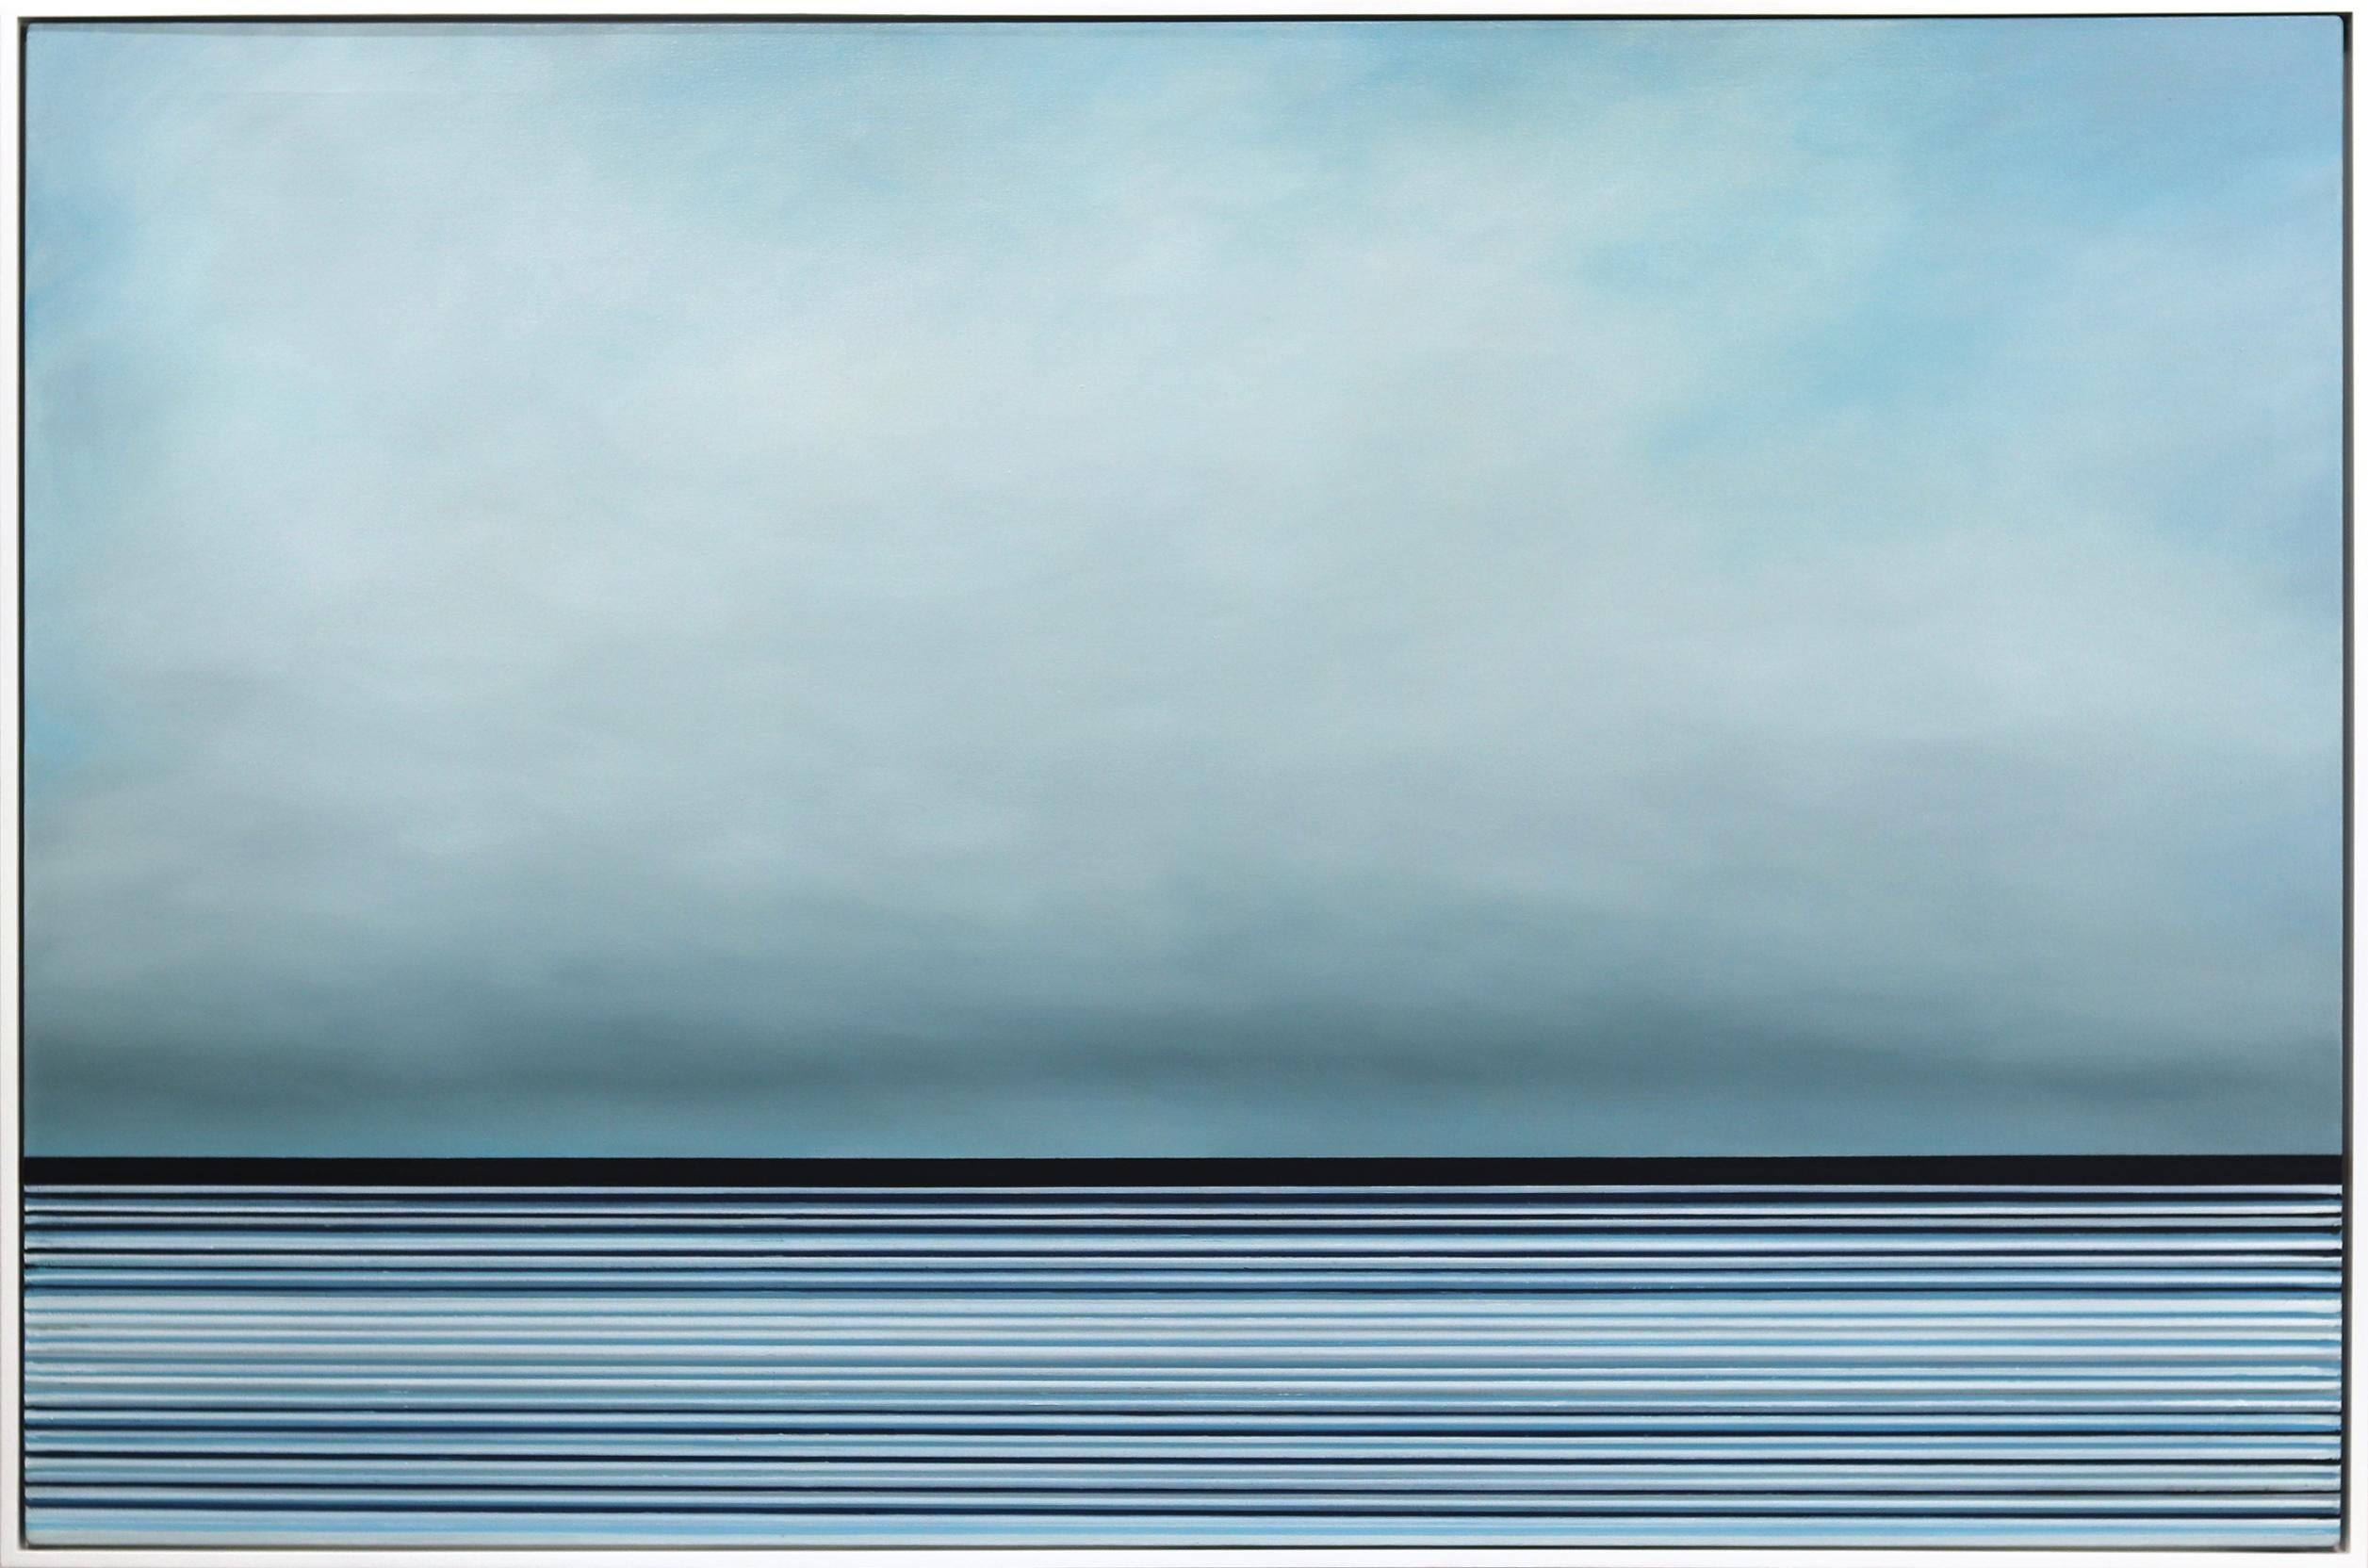 Untitled No. 443 - Framed Contemporary Minimalist Blue Artwork